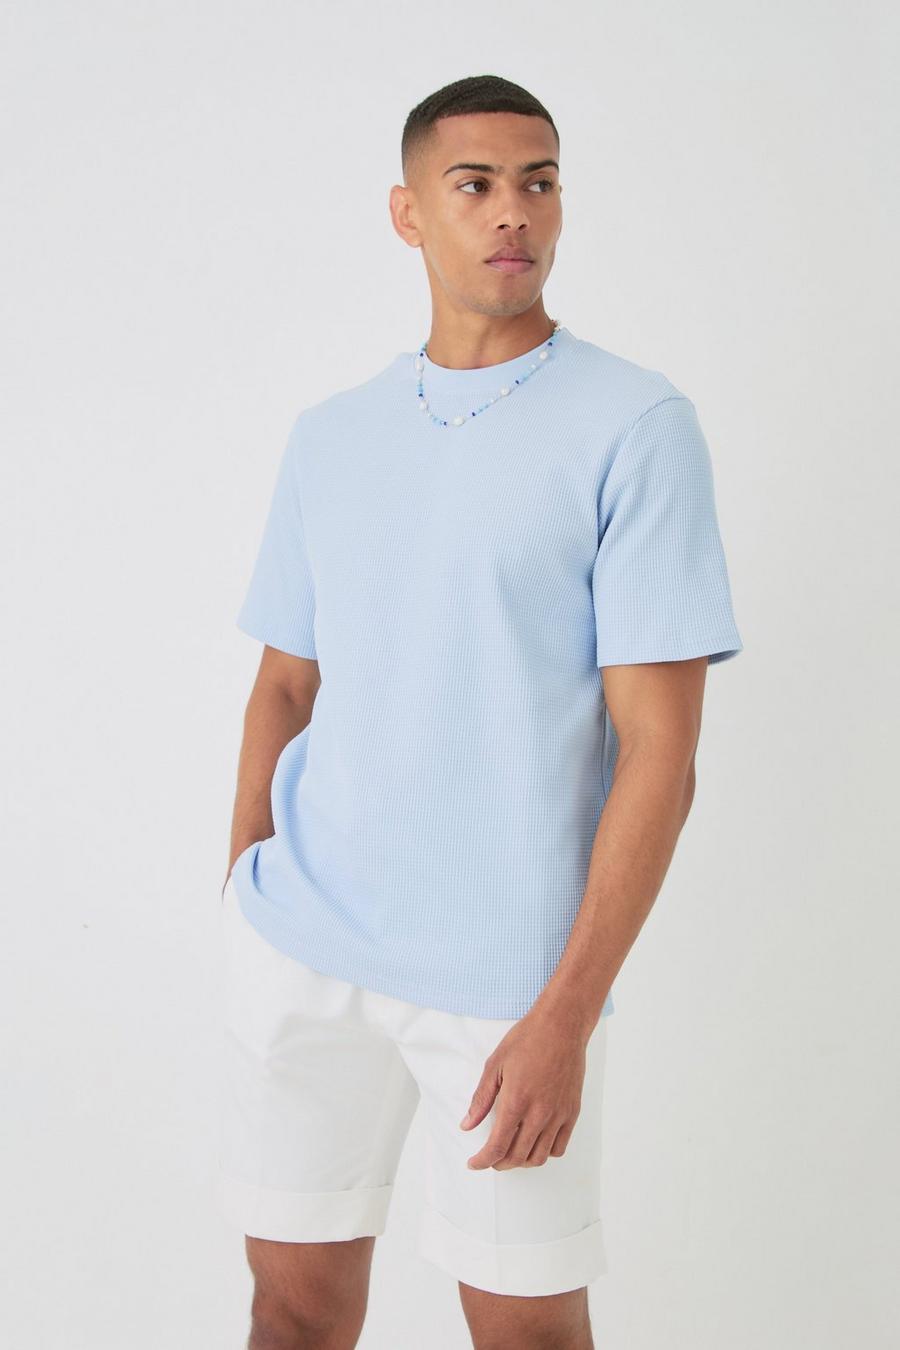 Pastel blue Wafel Gebreid Core T-Shirt